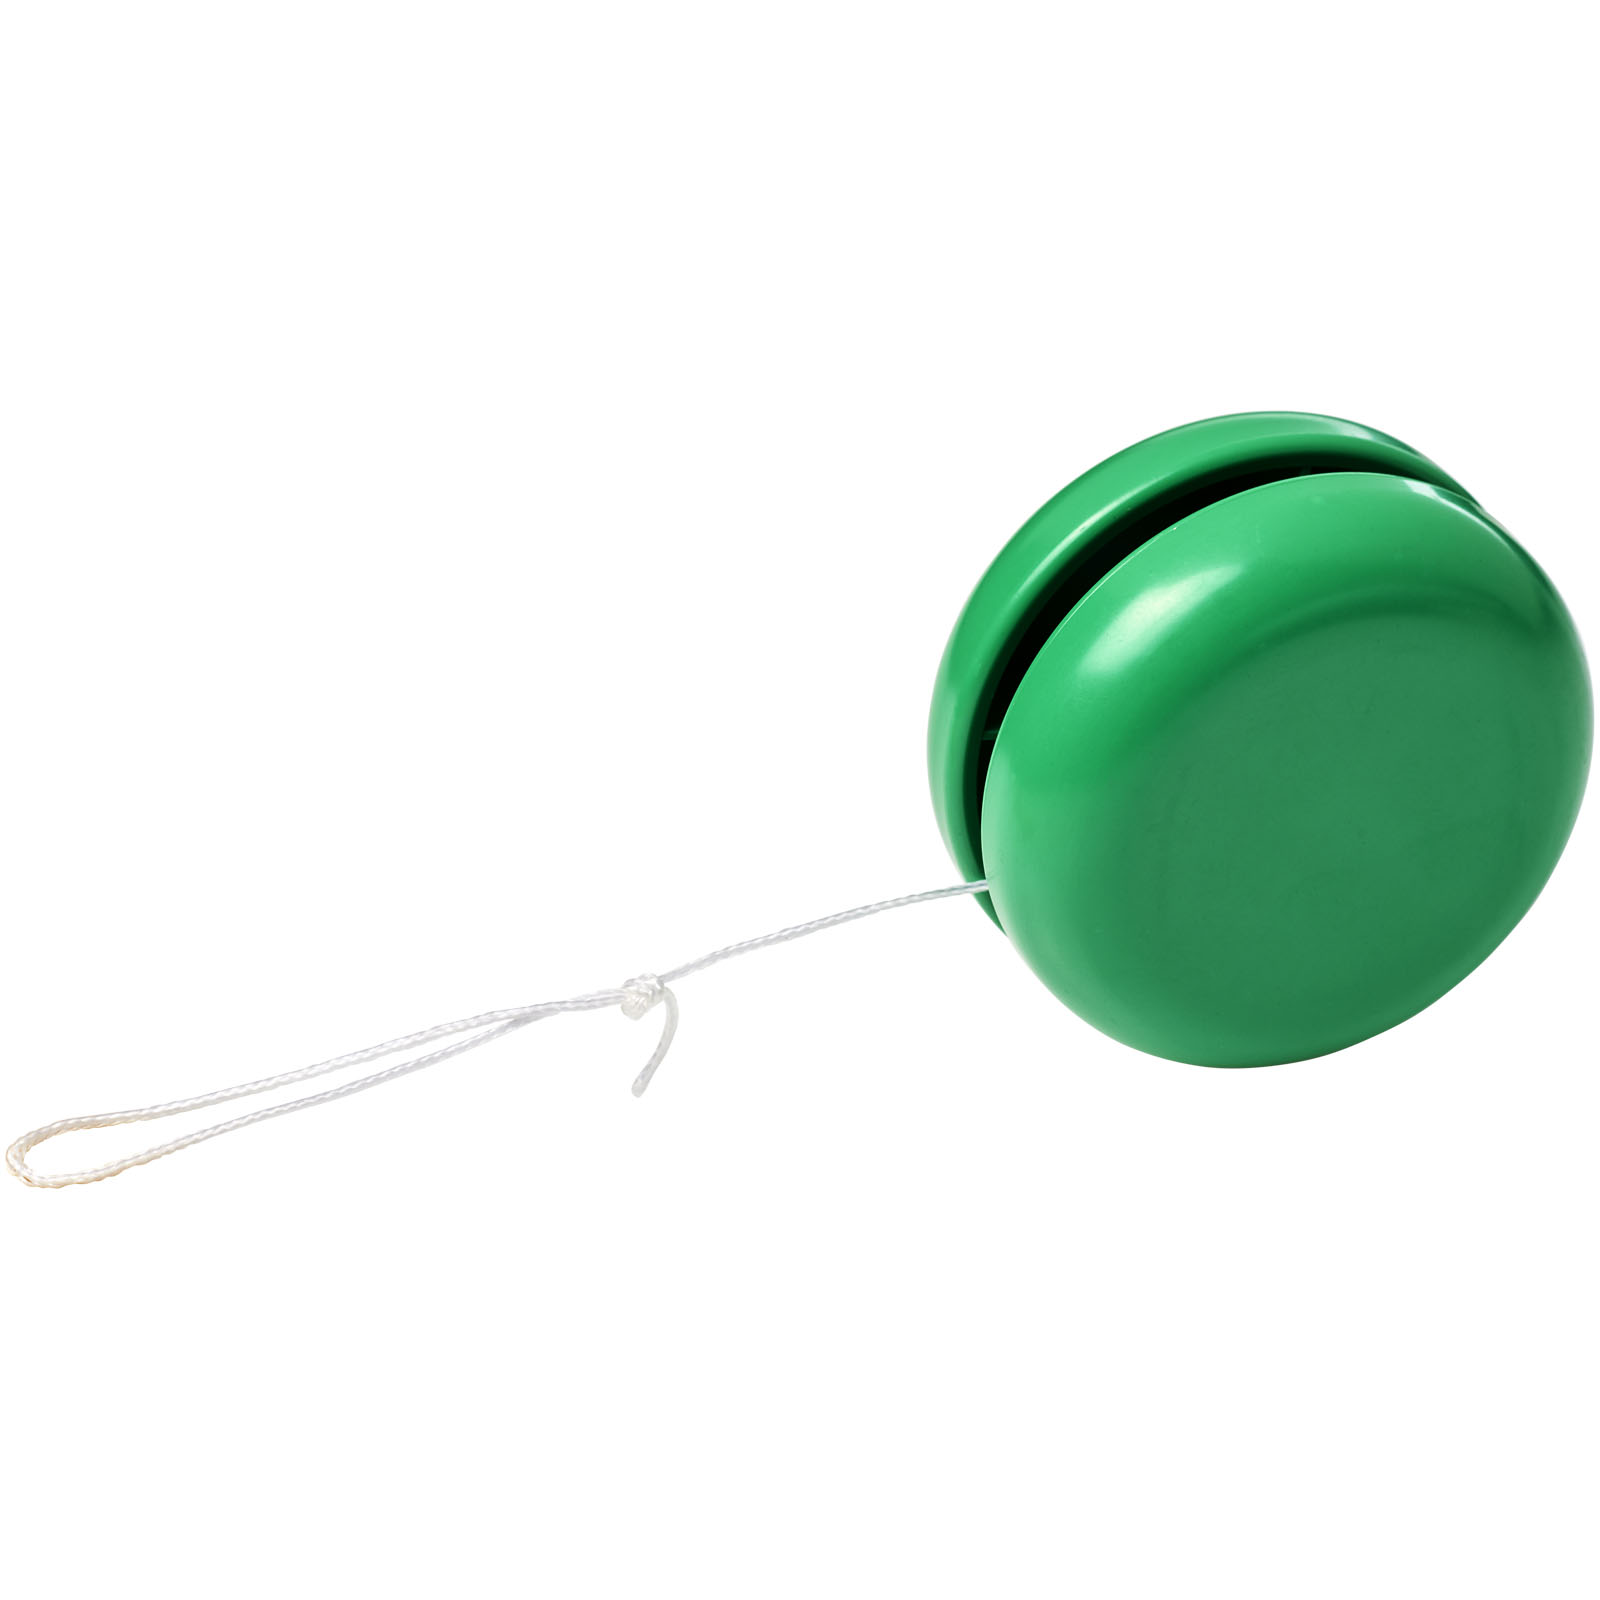 Indoor Games - Garo plastic yo-yo